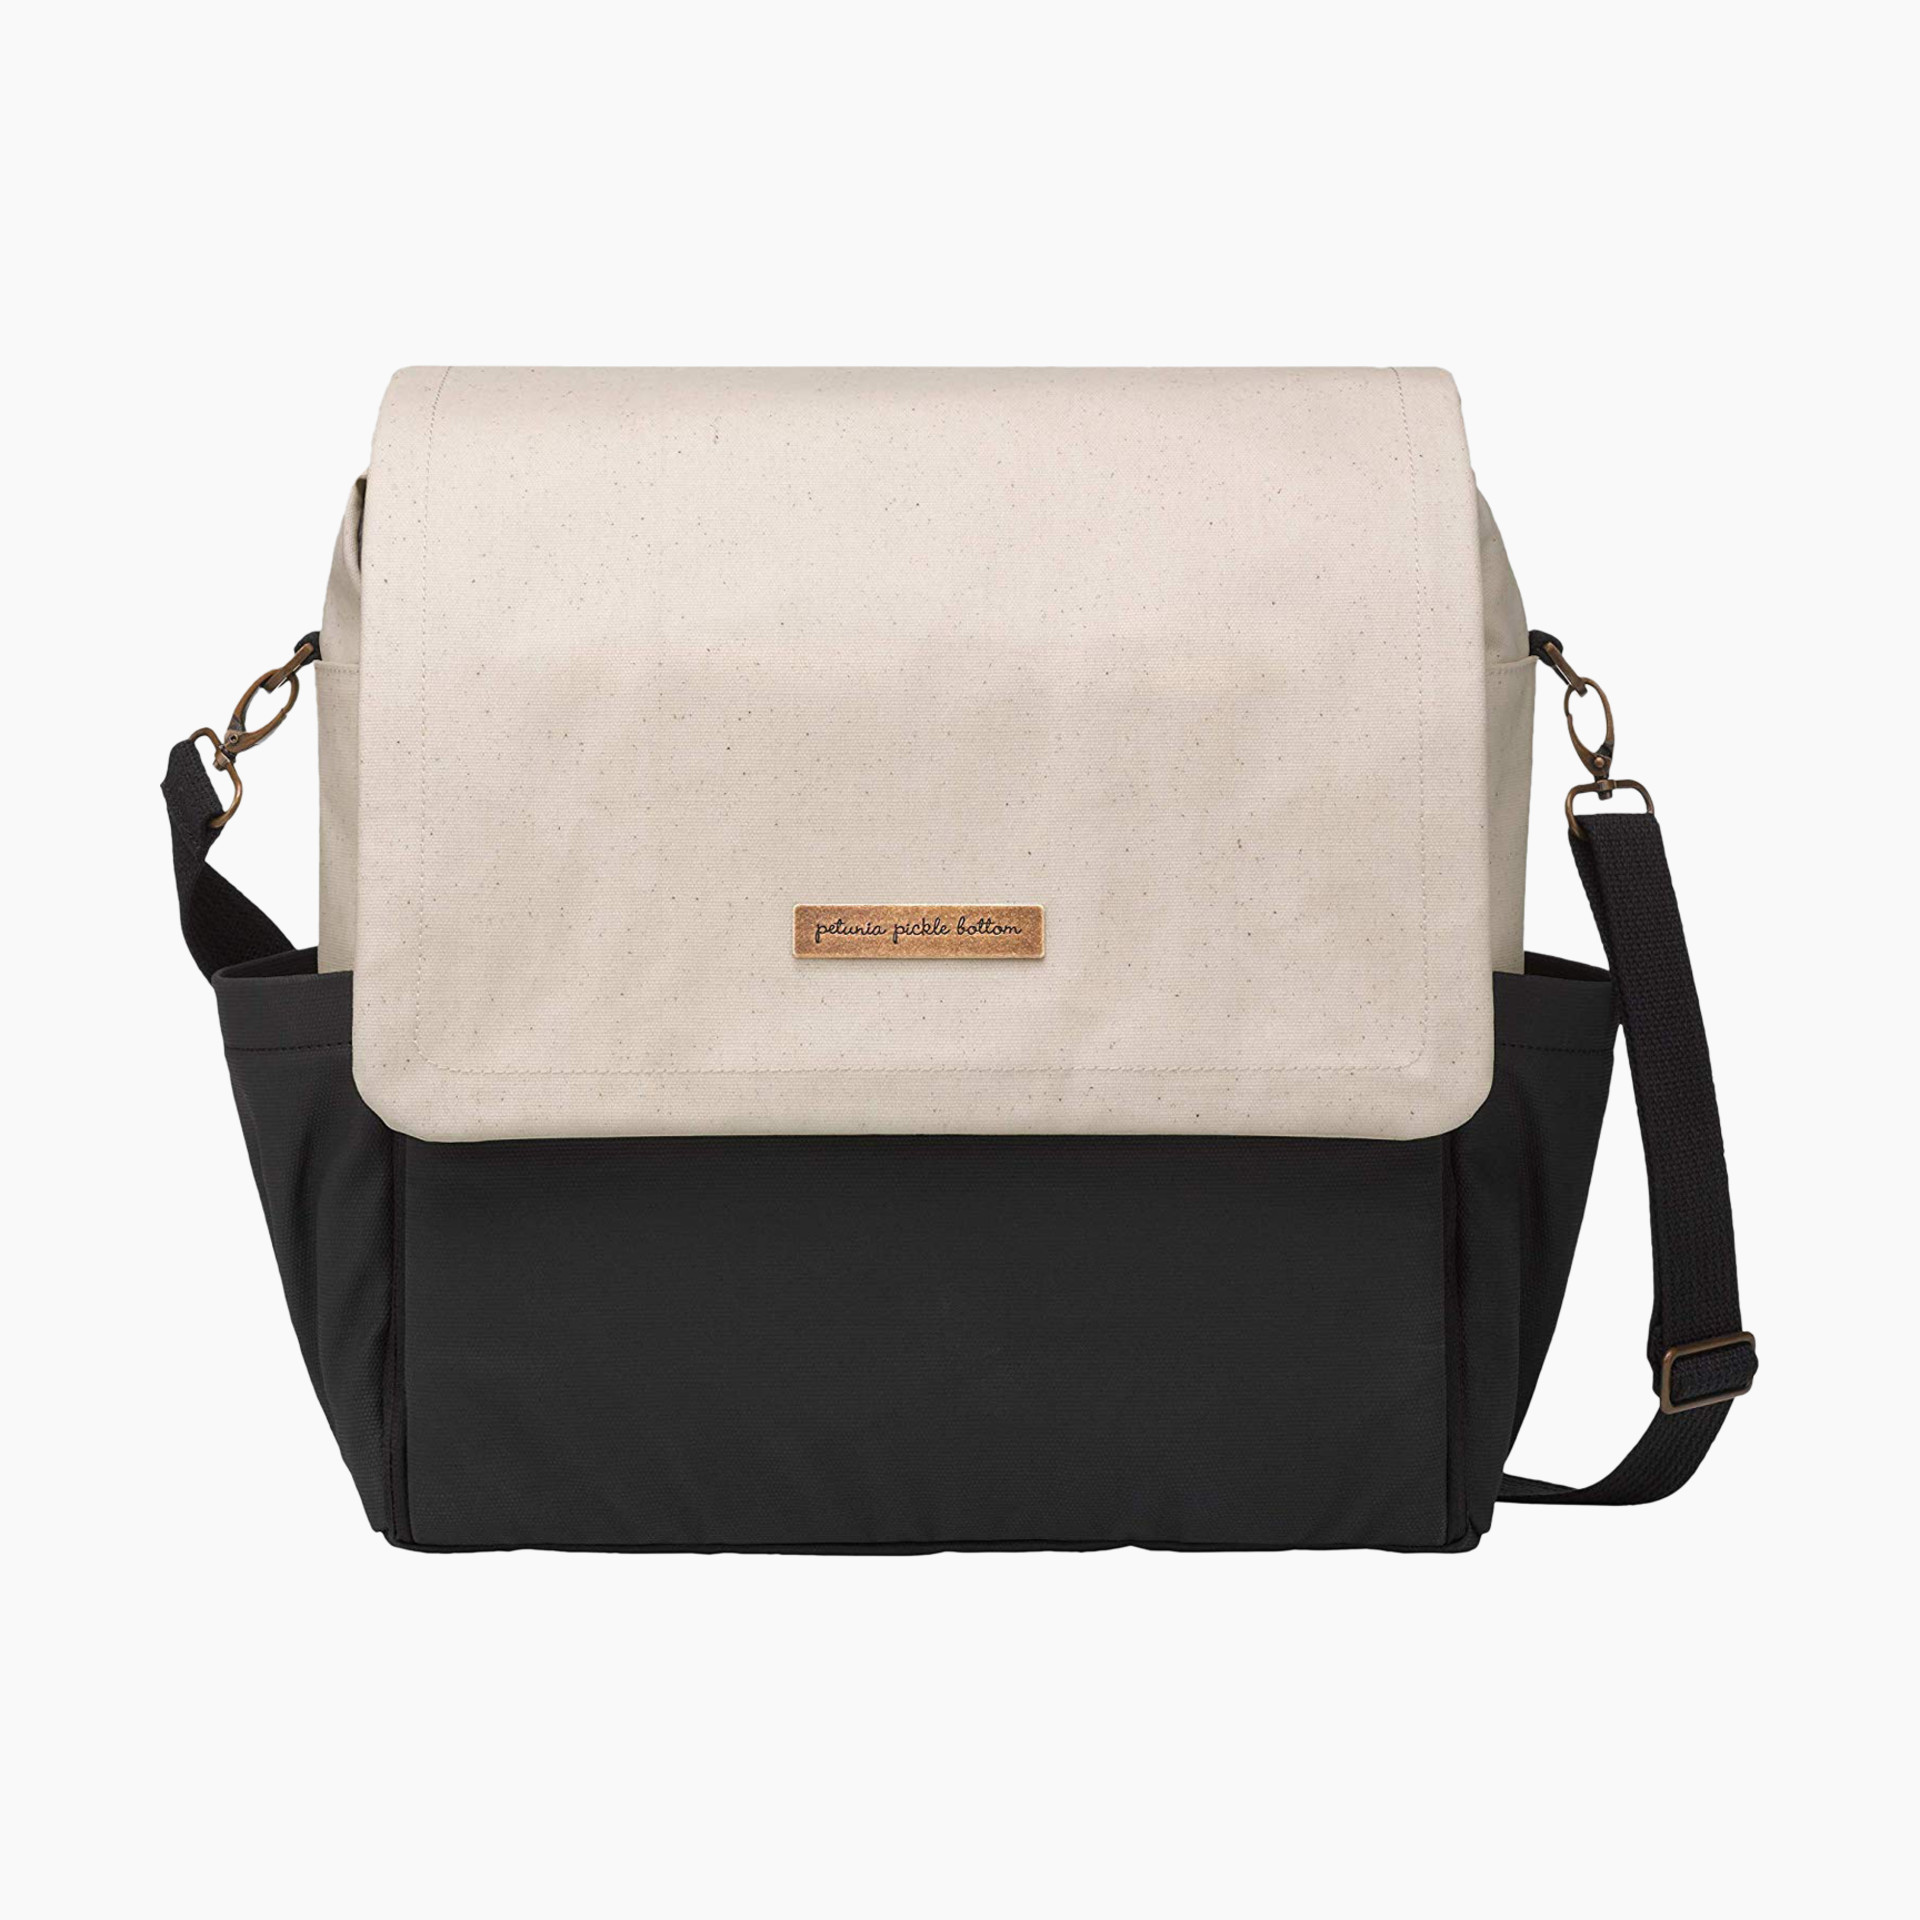 Petunia Pickle Bottom Boxy Backpack Diaper Bag - Sand Black